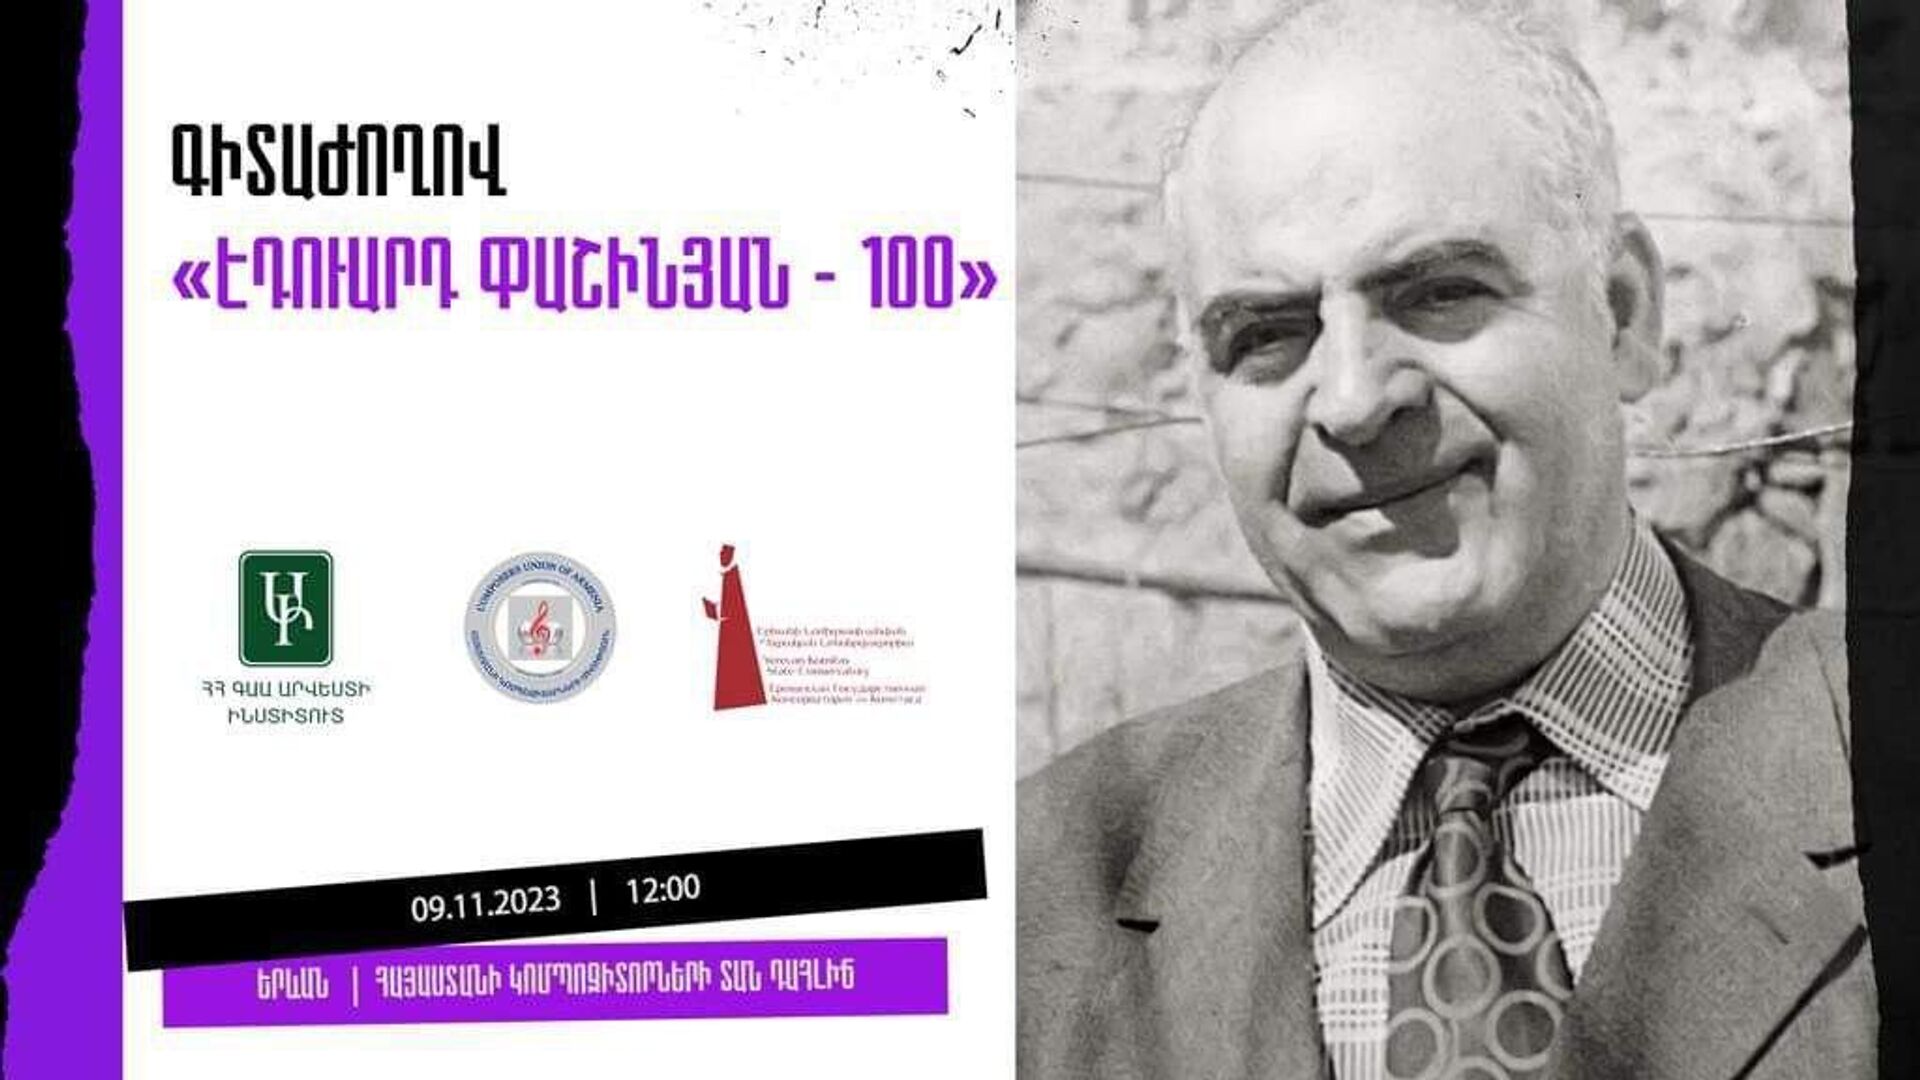 В Ереване пройдет научная конференция на тему Эдуард Пашинян - 100 - Sputnik Армения, 1920, 07.11.2023